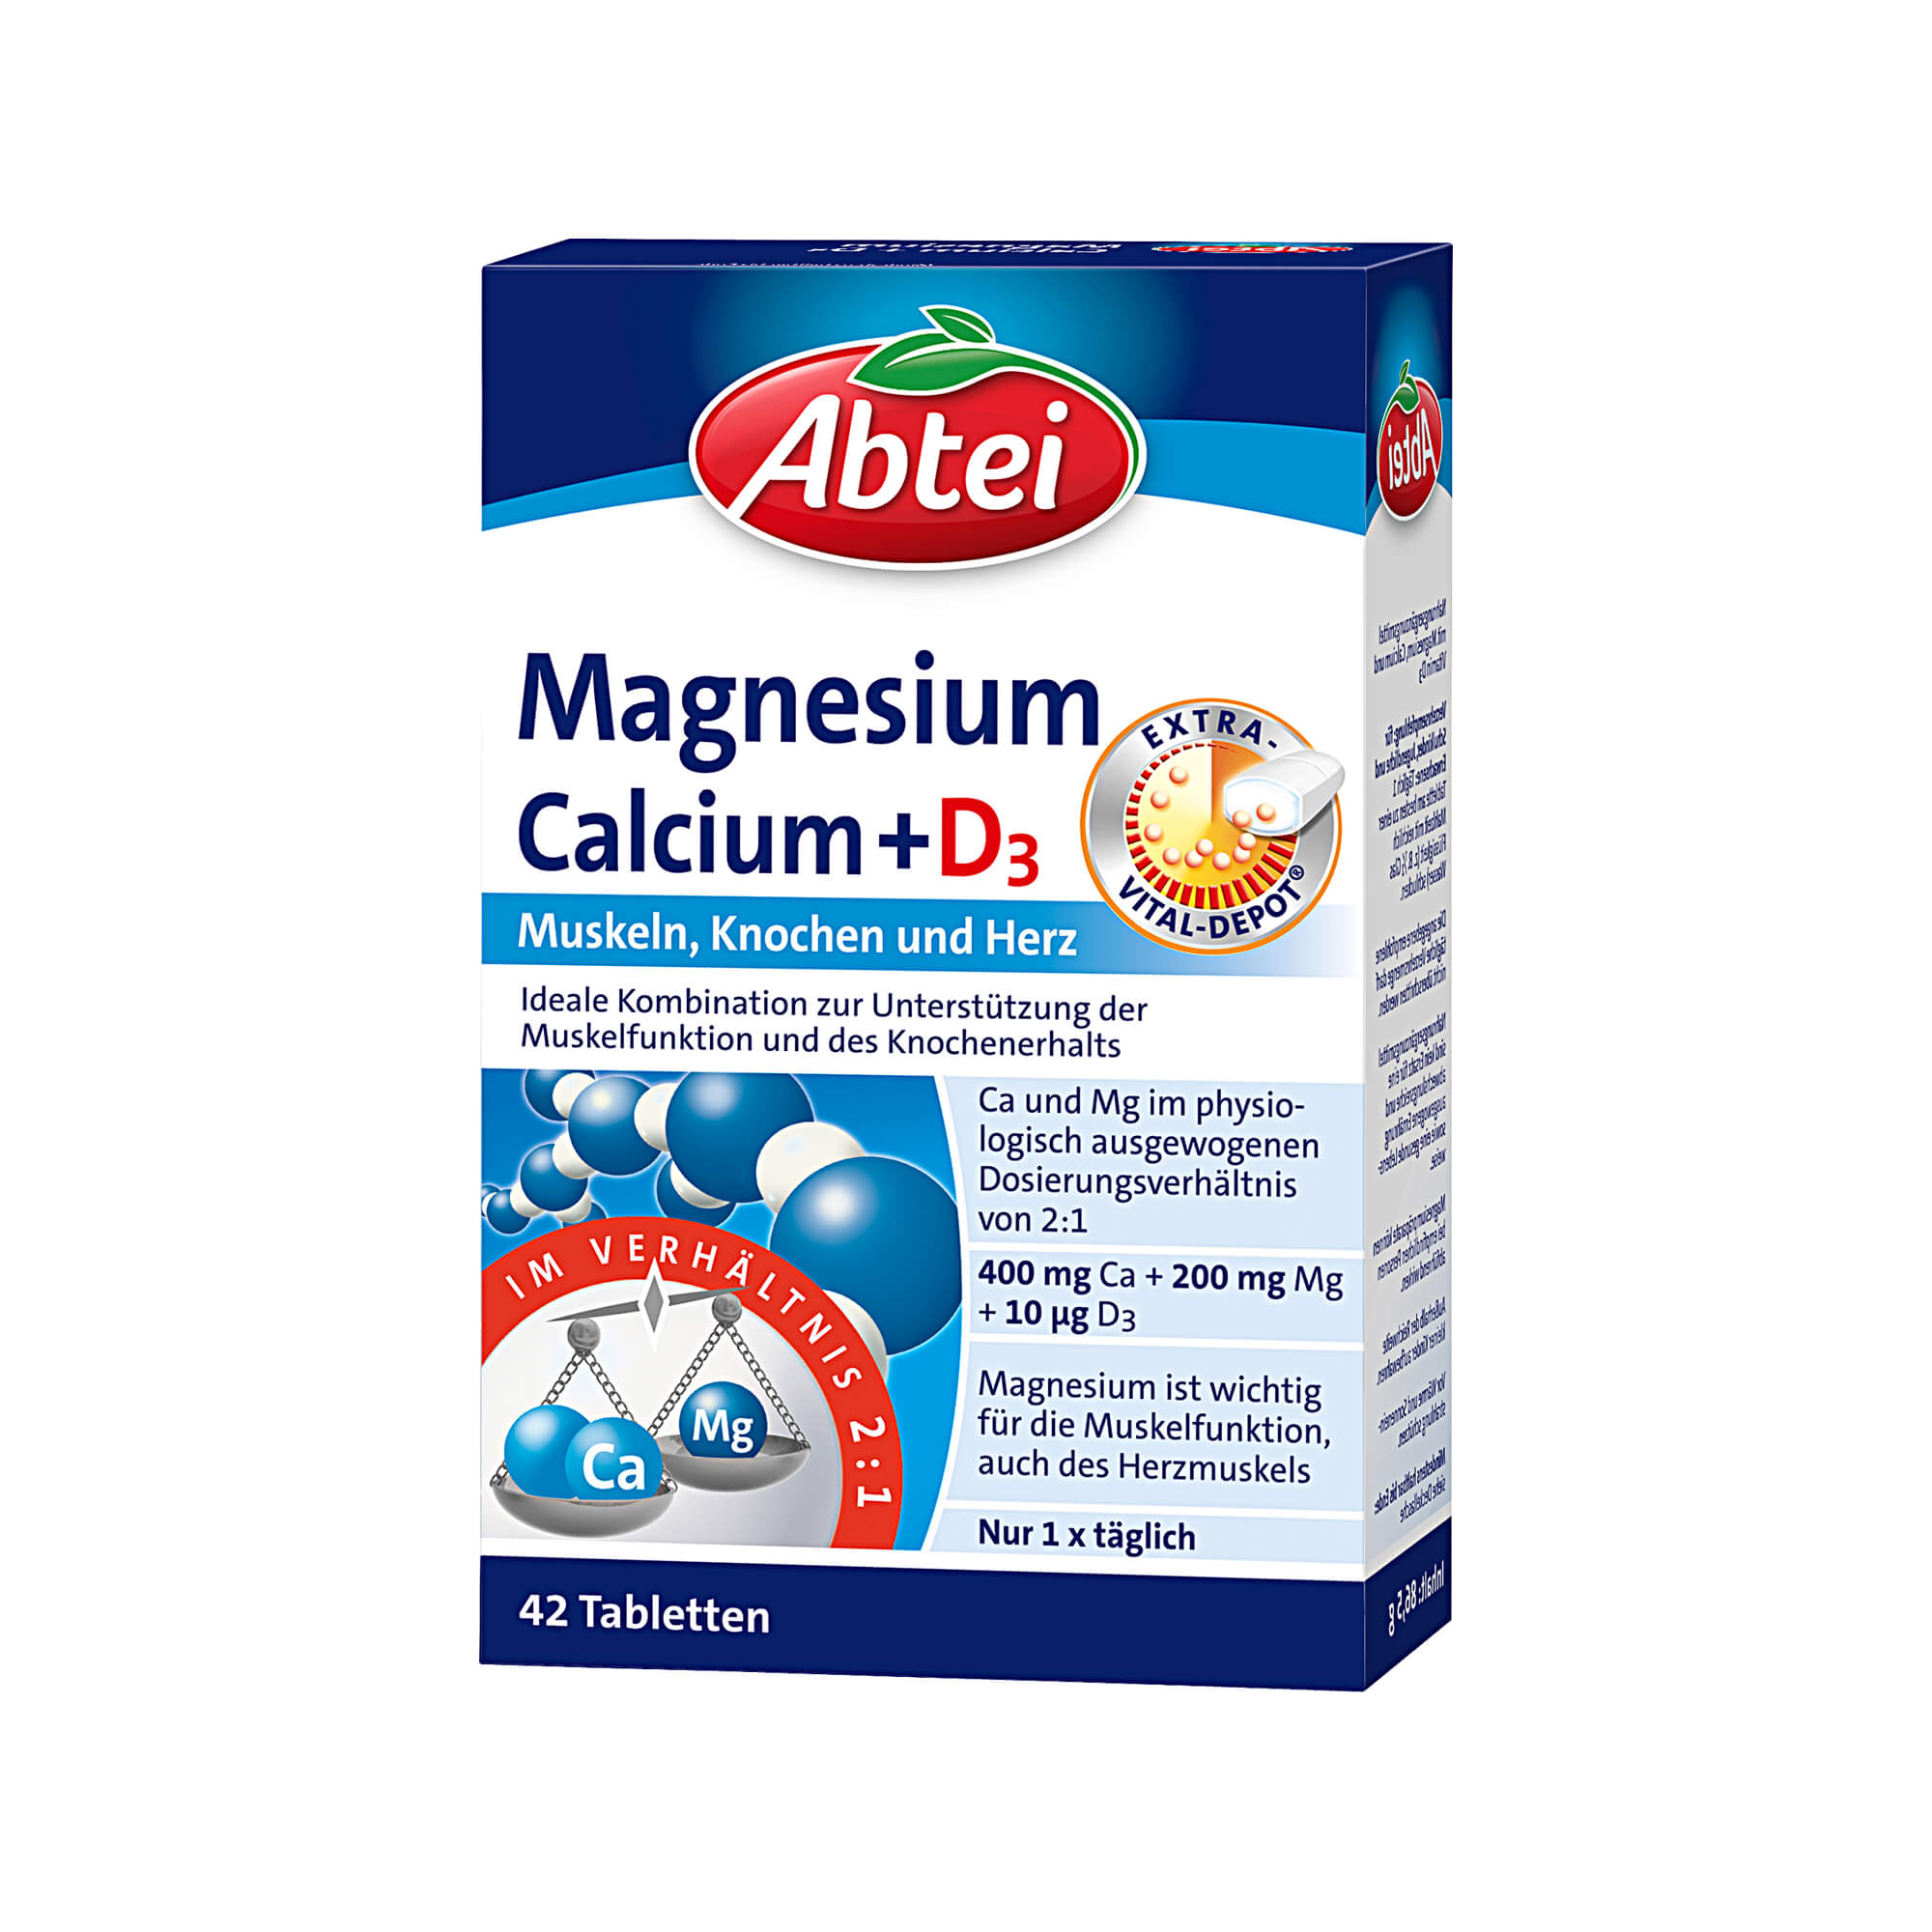 Nahrungsergänzungsmittel mit Magnesium, Calcium und Vitamin D3.